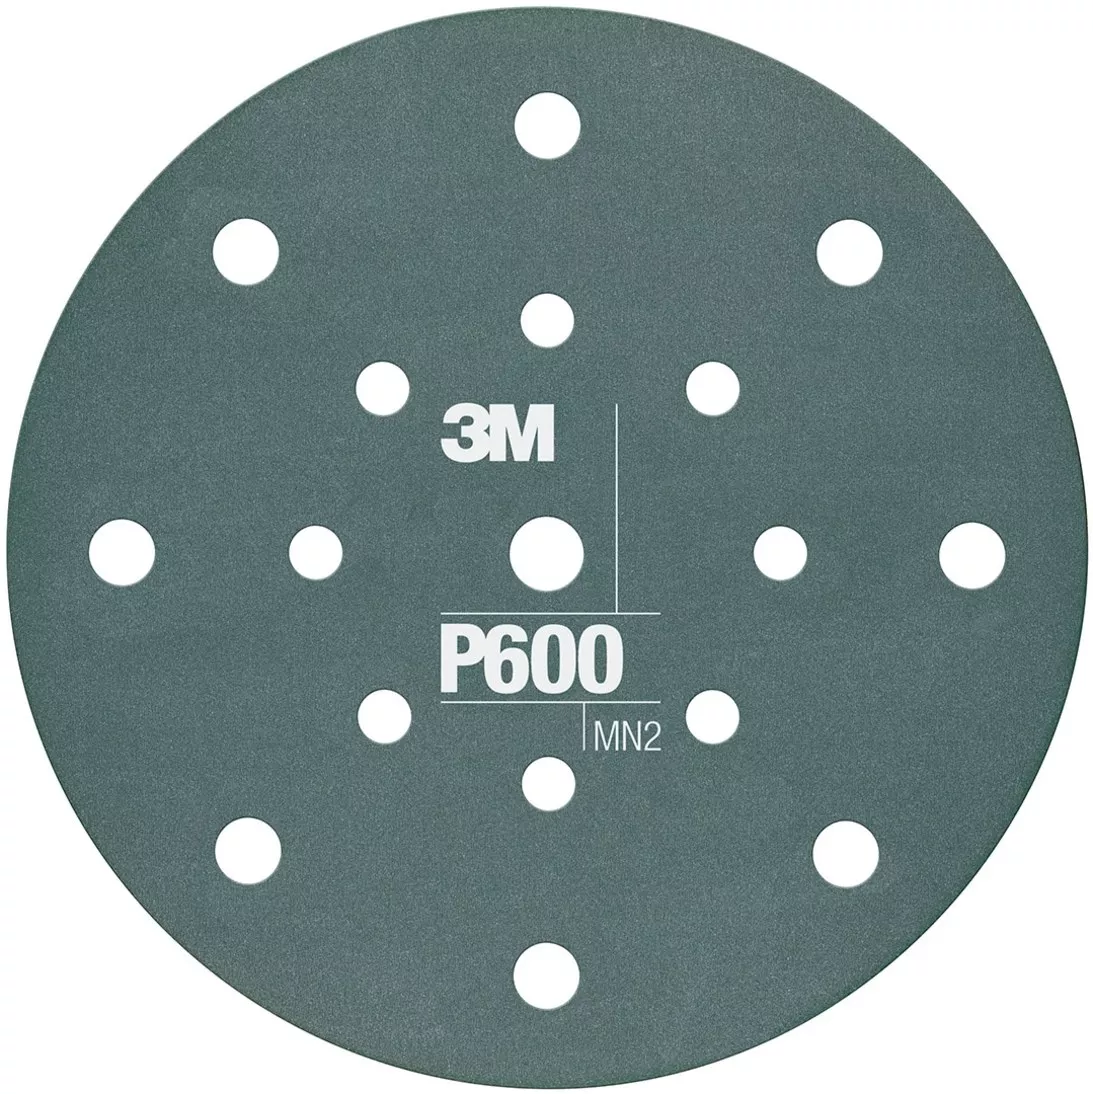 3M™ Hookit™ Flexible Abrasive Disc 270J, 34801, 6 in, Dust Free, P600,
25 discs per carton, 5 cartons per case